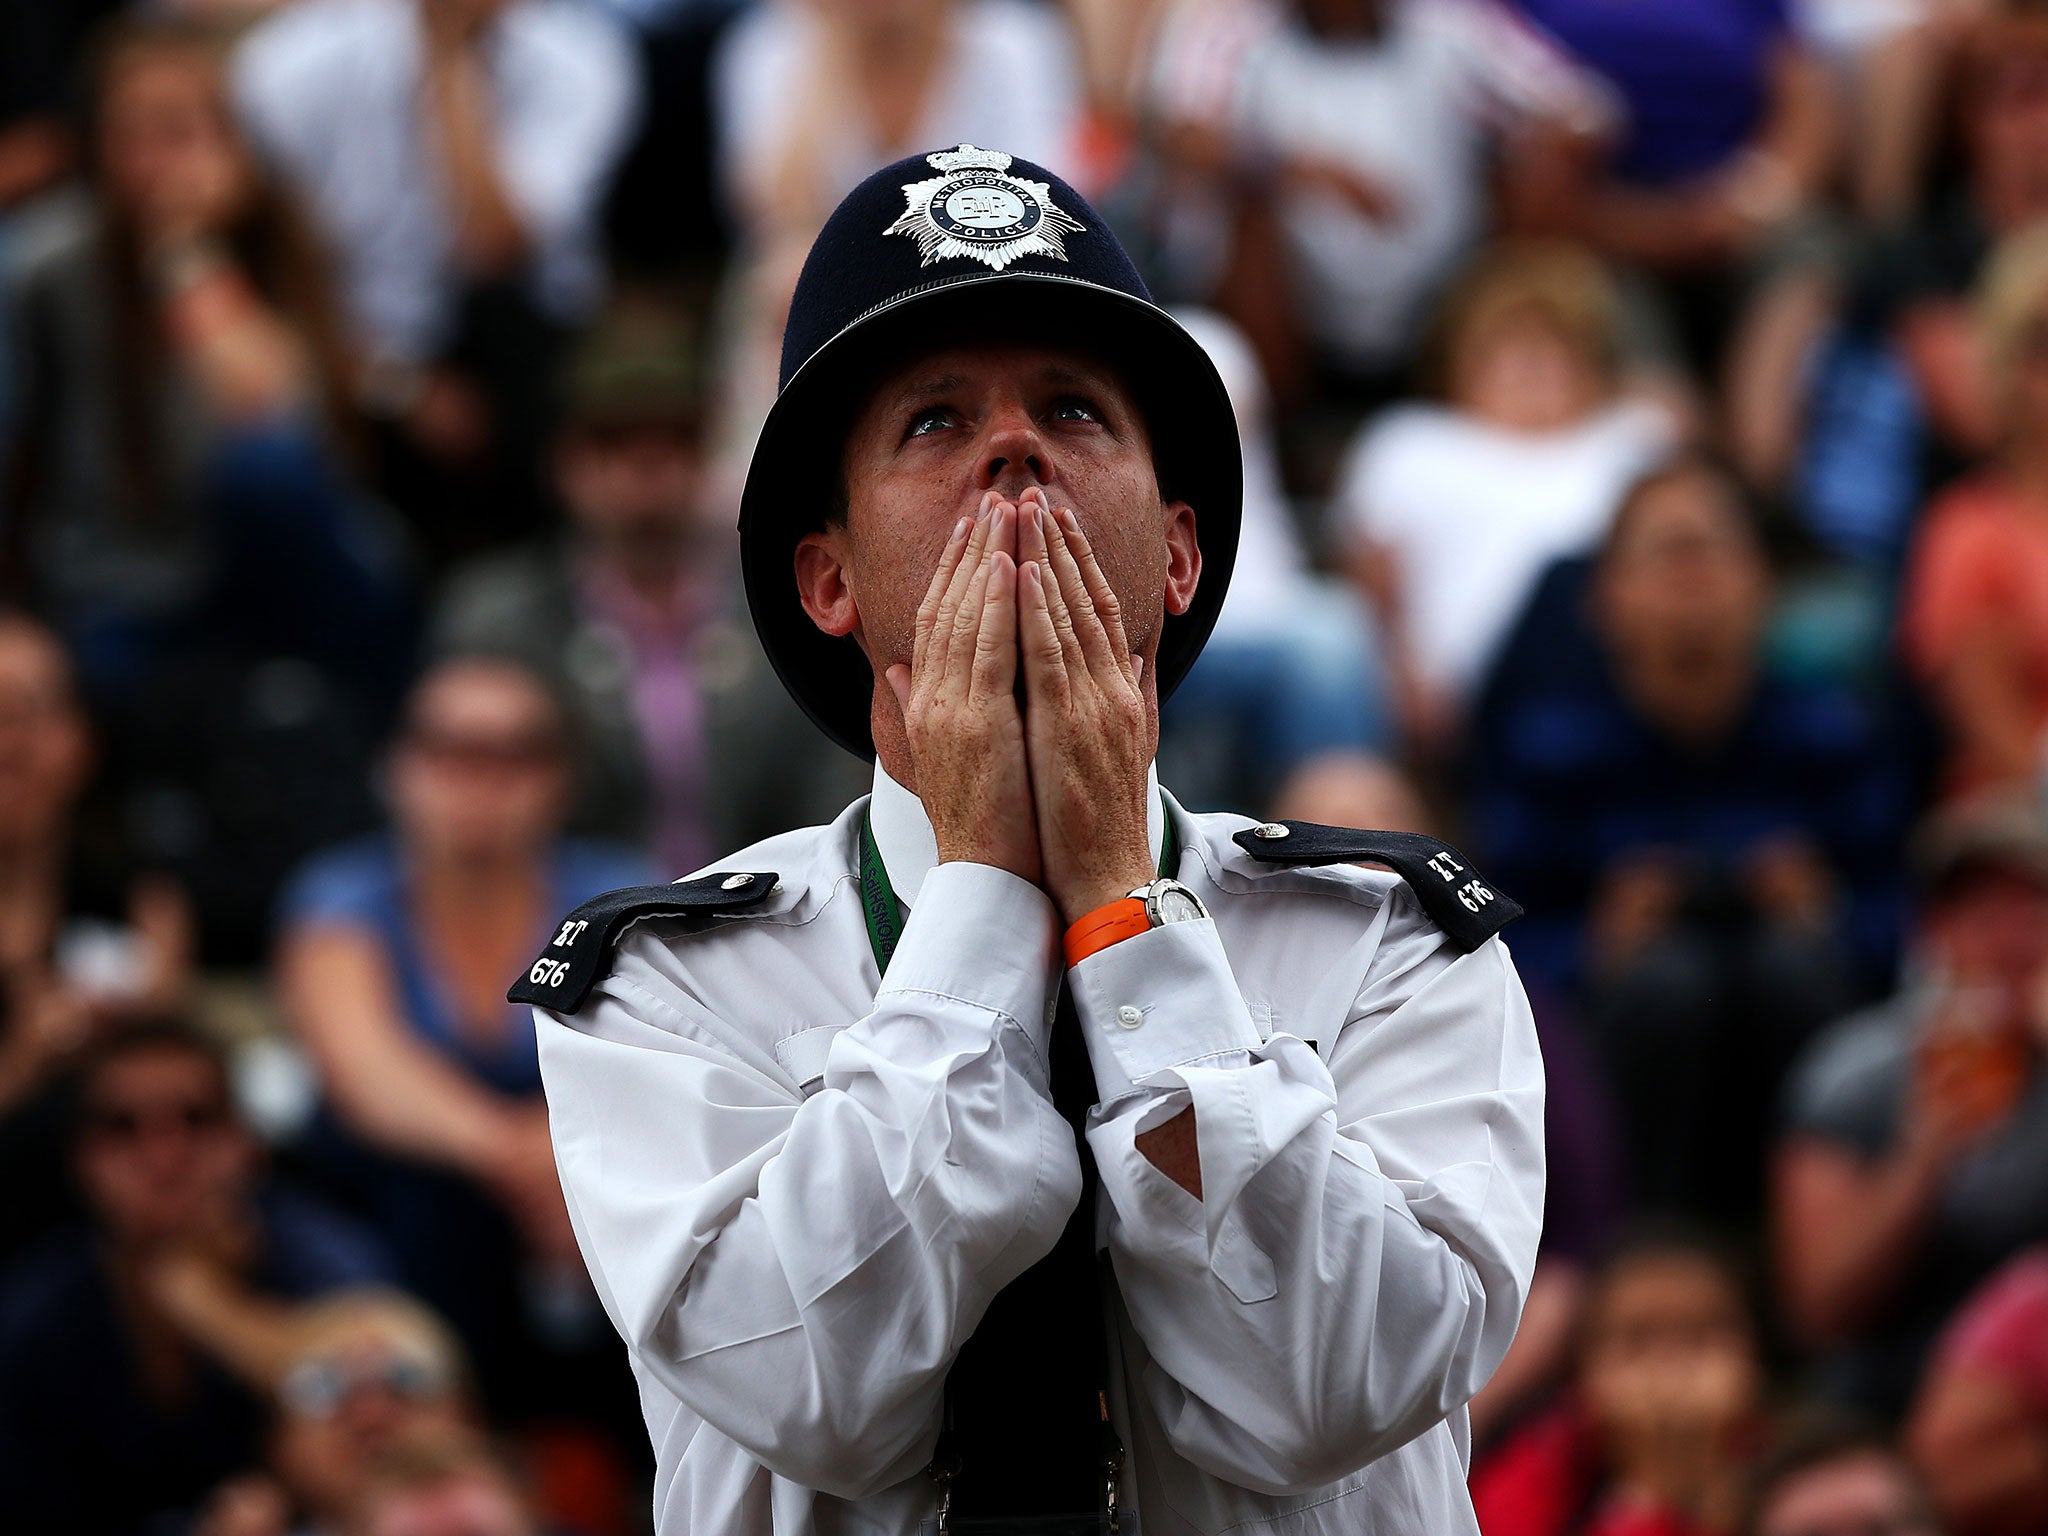 A policeman reacts during the Wimbledon men's singles final